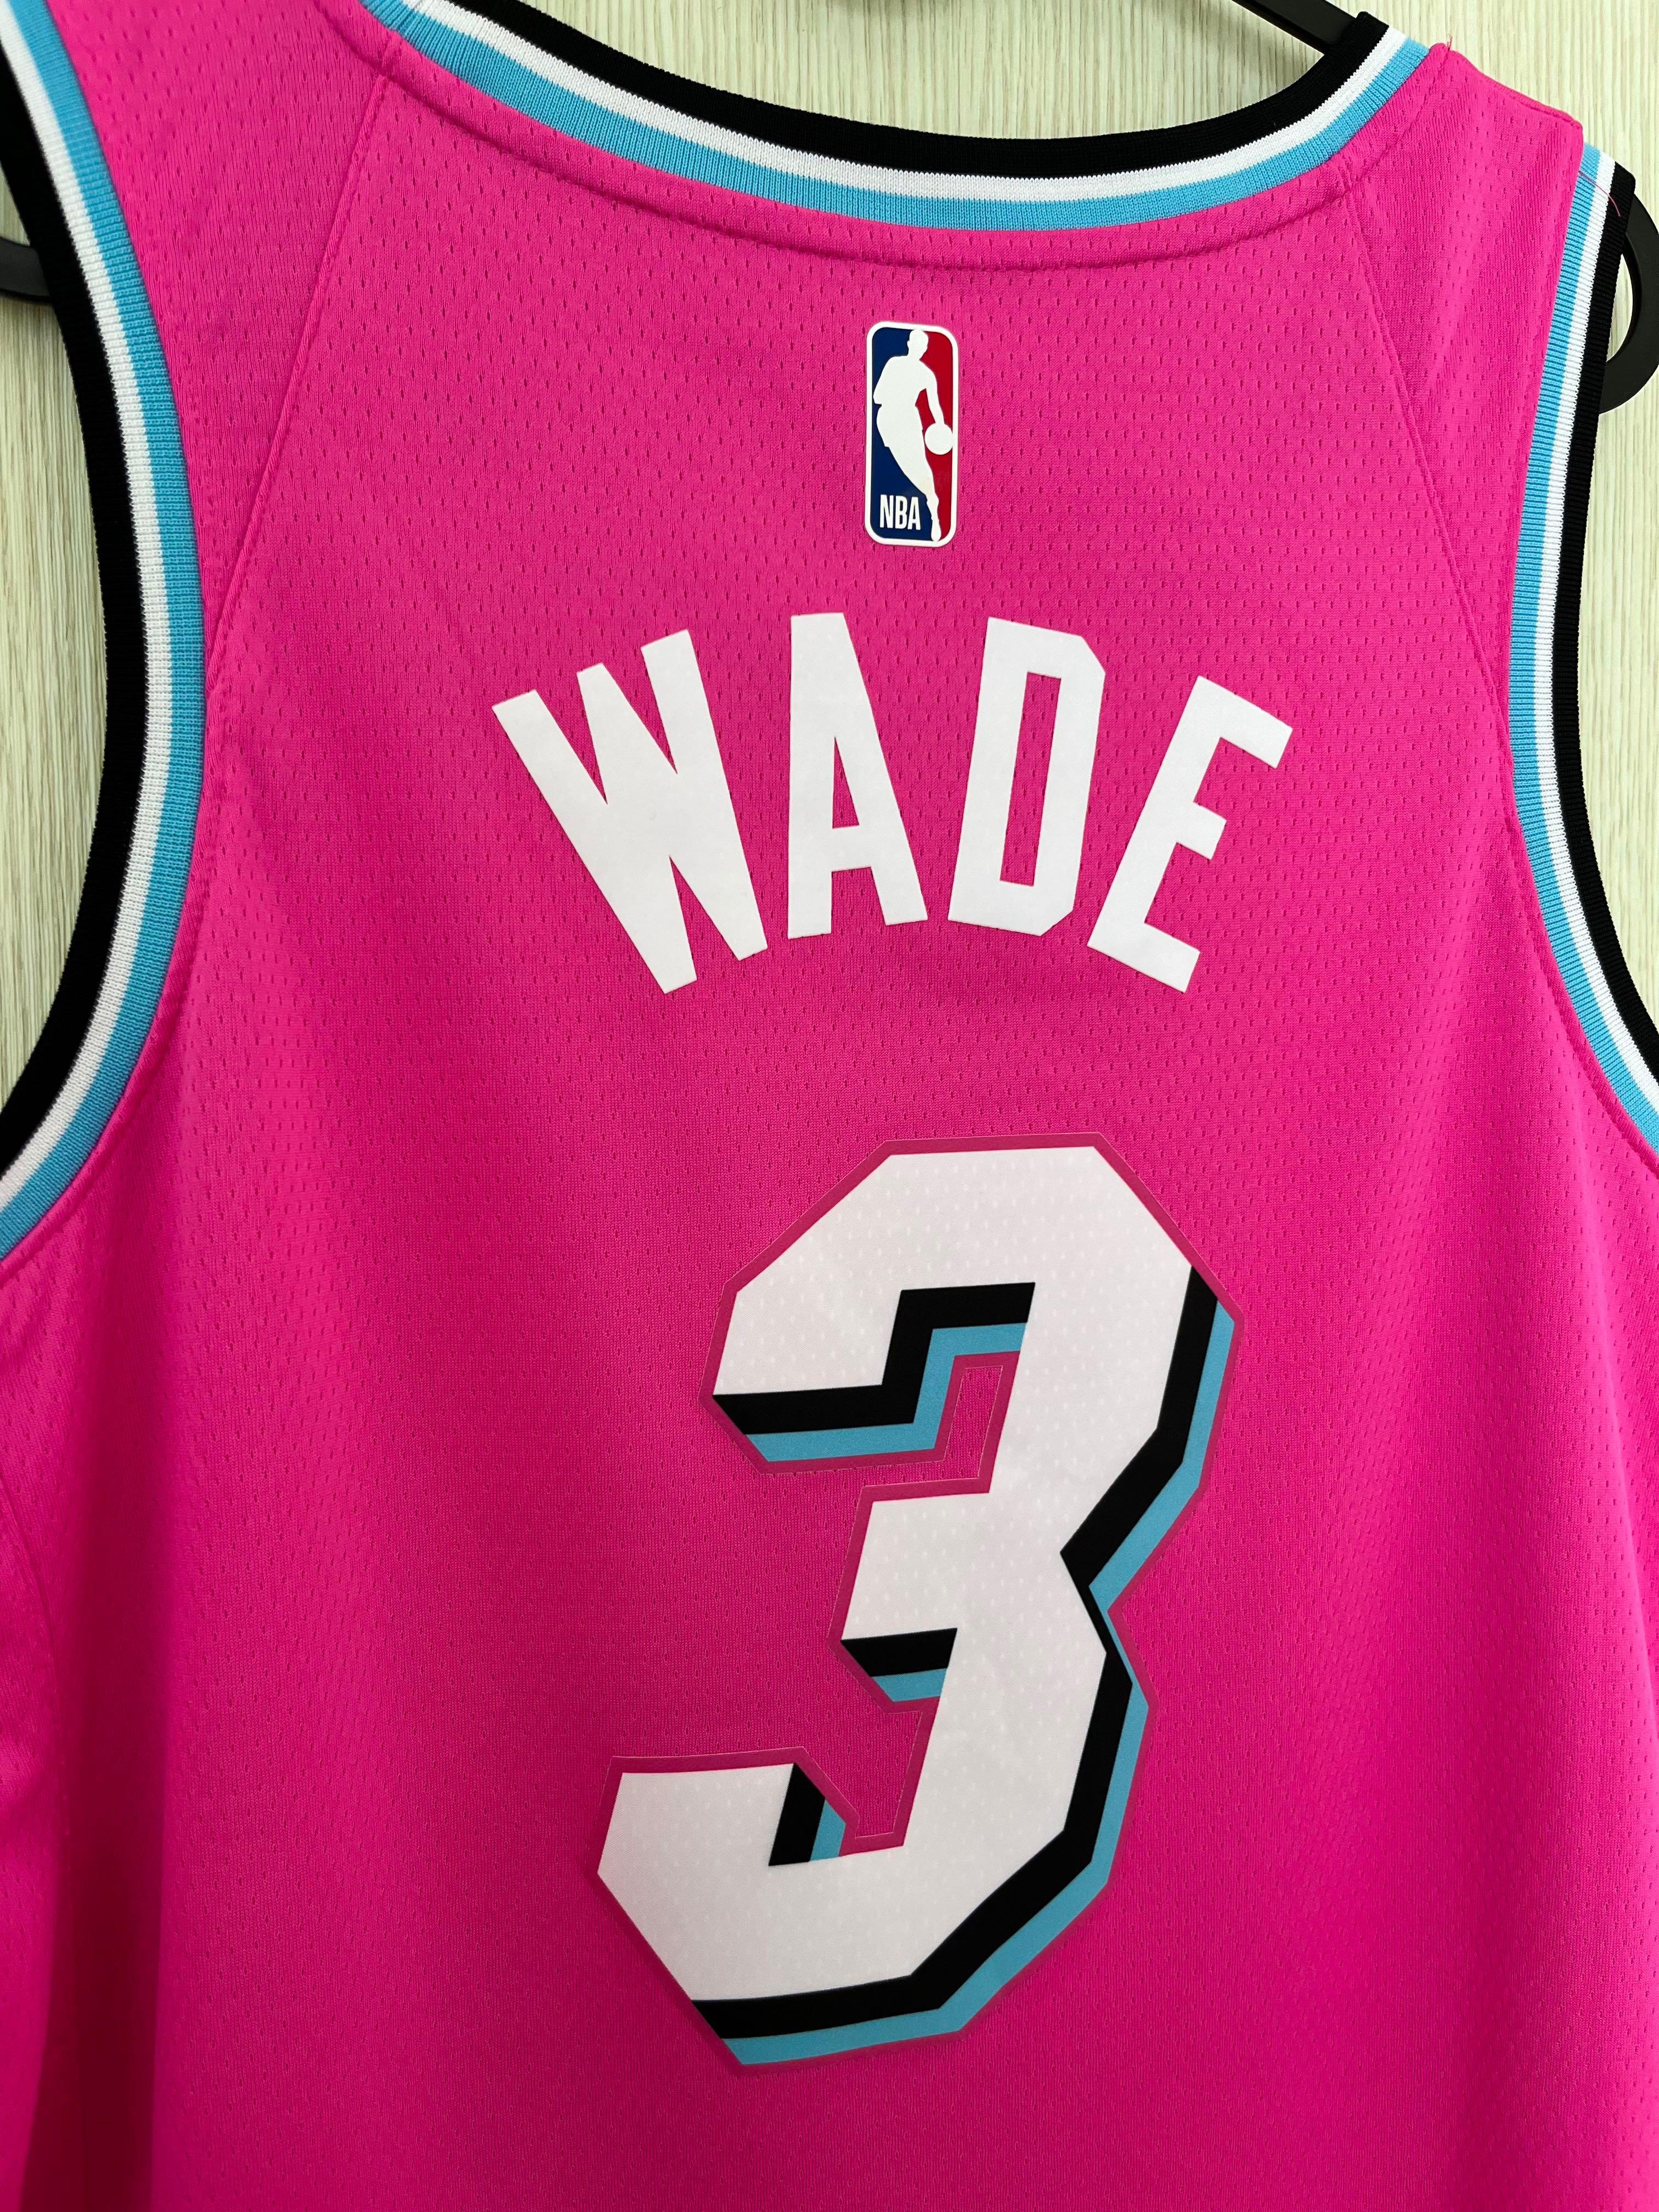 Miami Heat DWYANE WADE #3 Nike ViceWave NBA City Edition Authentic